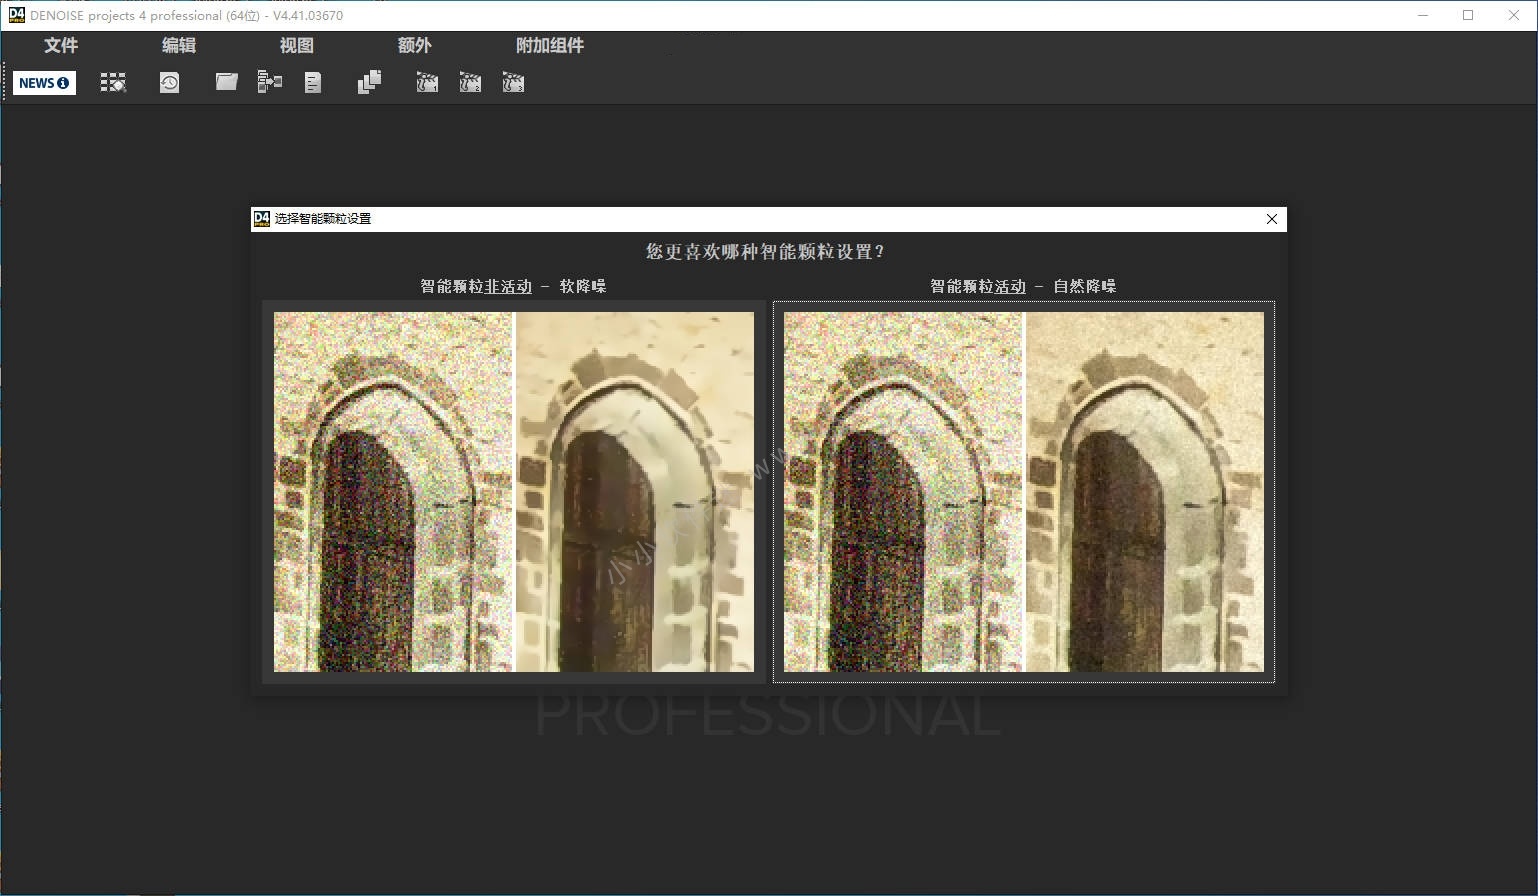 Franzis DENOISE Projects 4 Professional 4.41.03670中文版-图像降噪软件